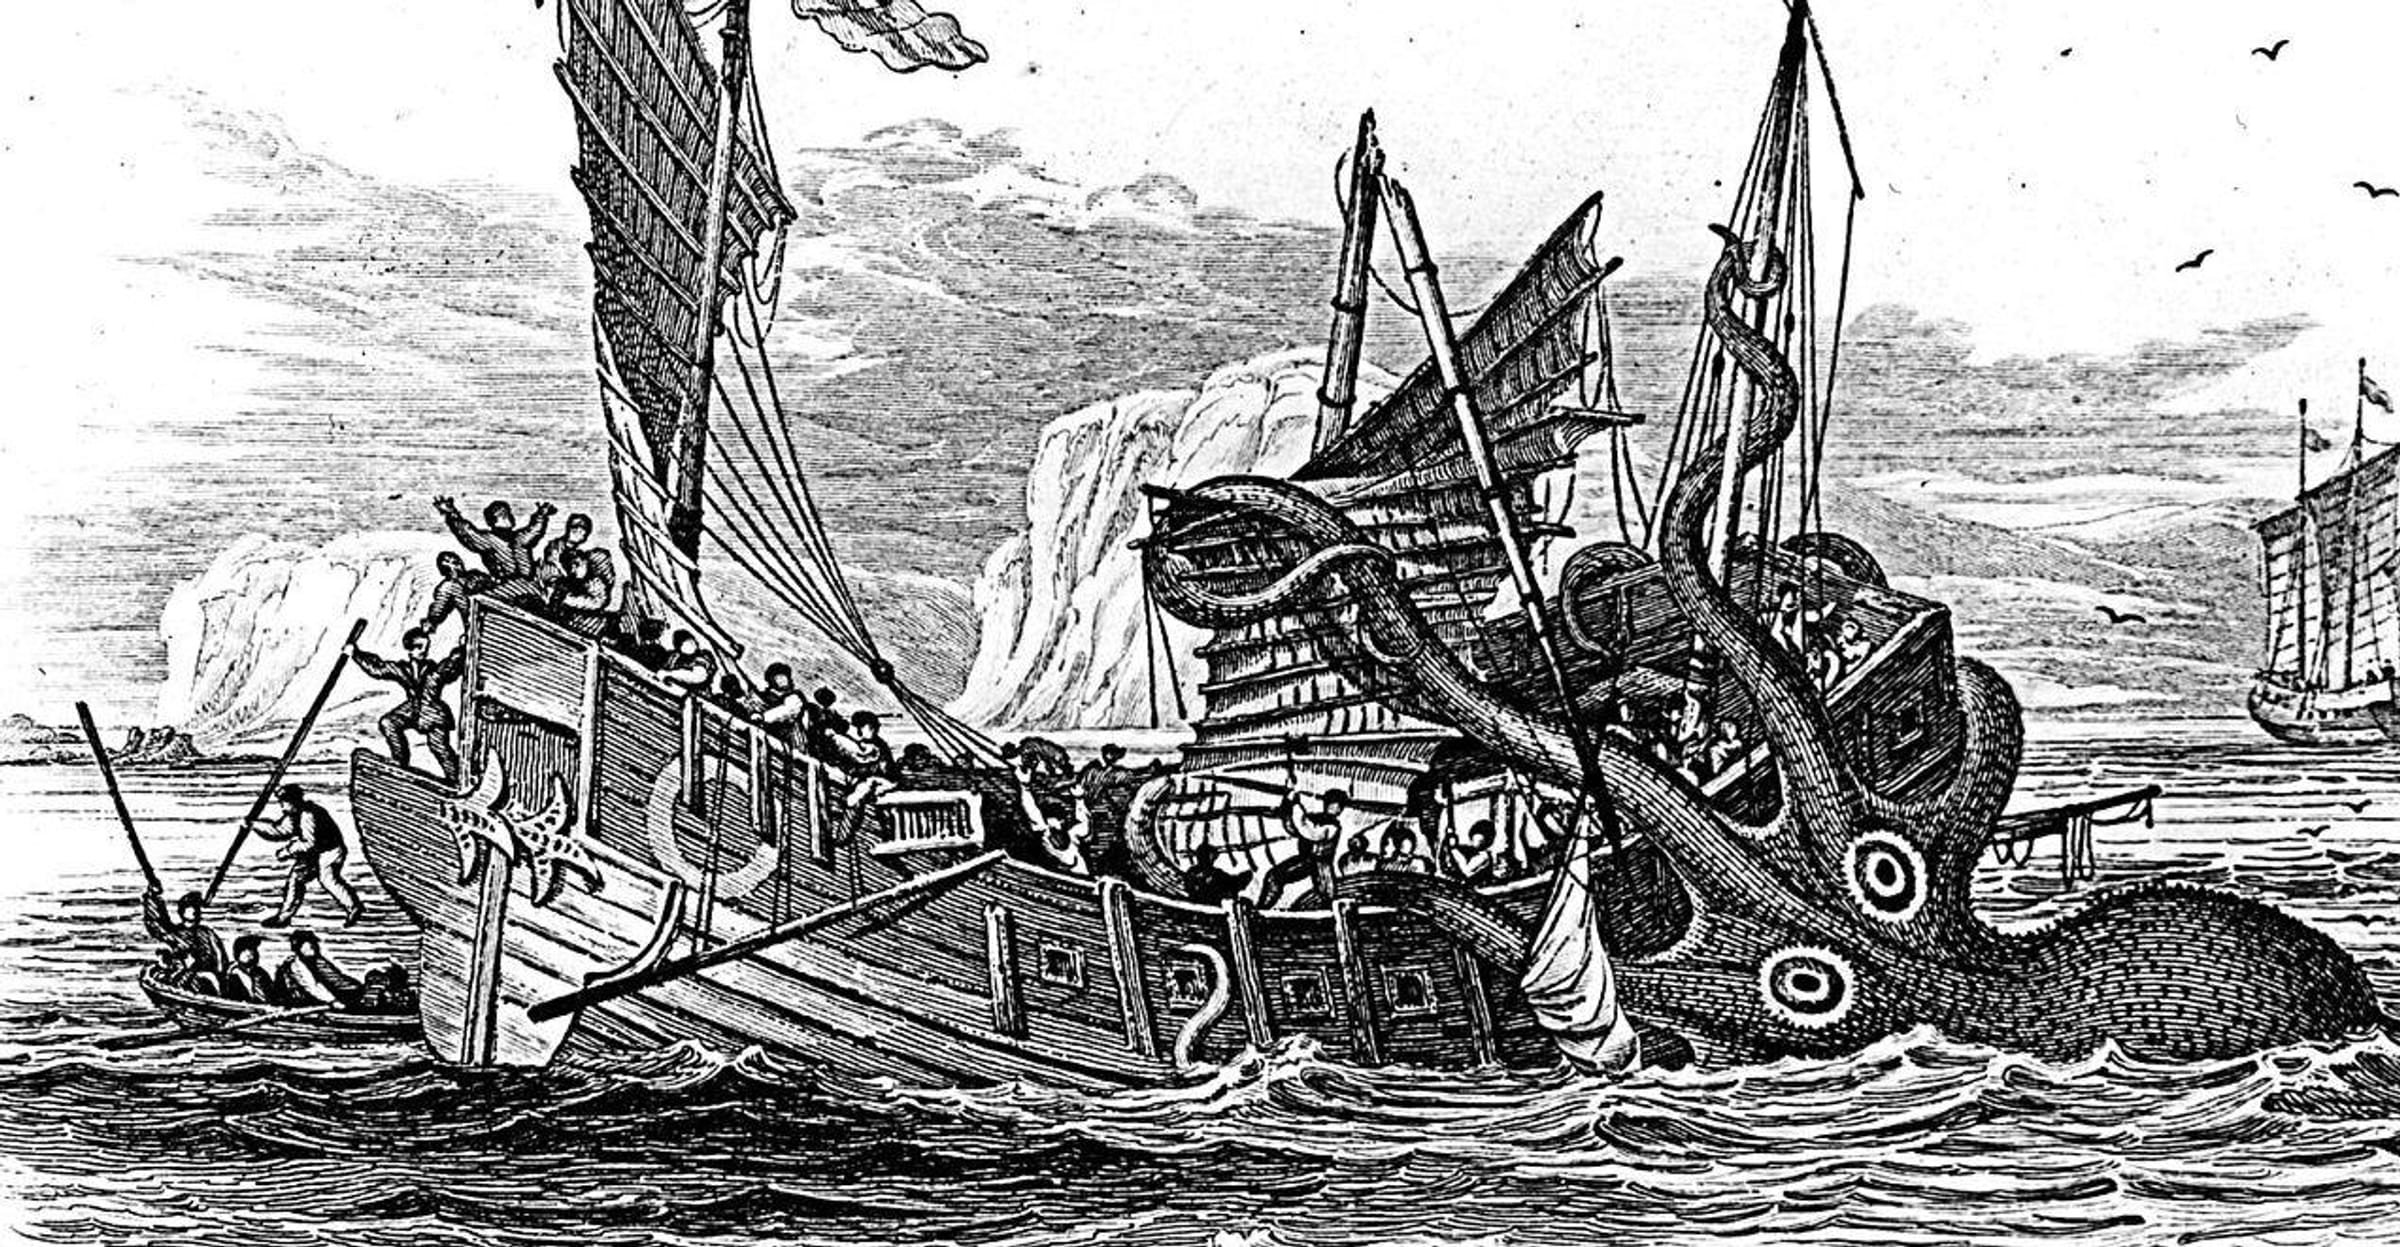 John's Pass Pirate Ship, The Kraken